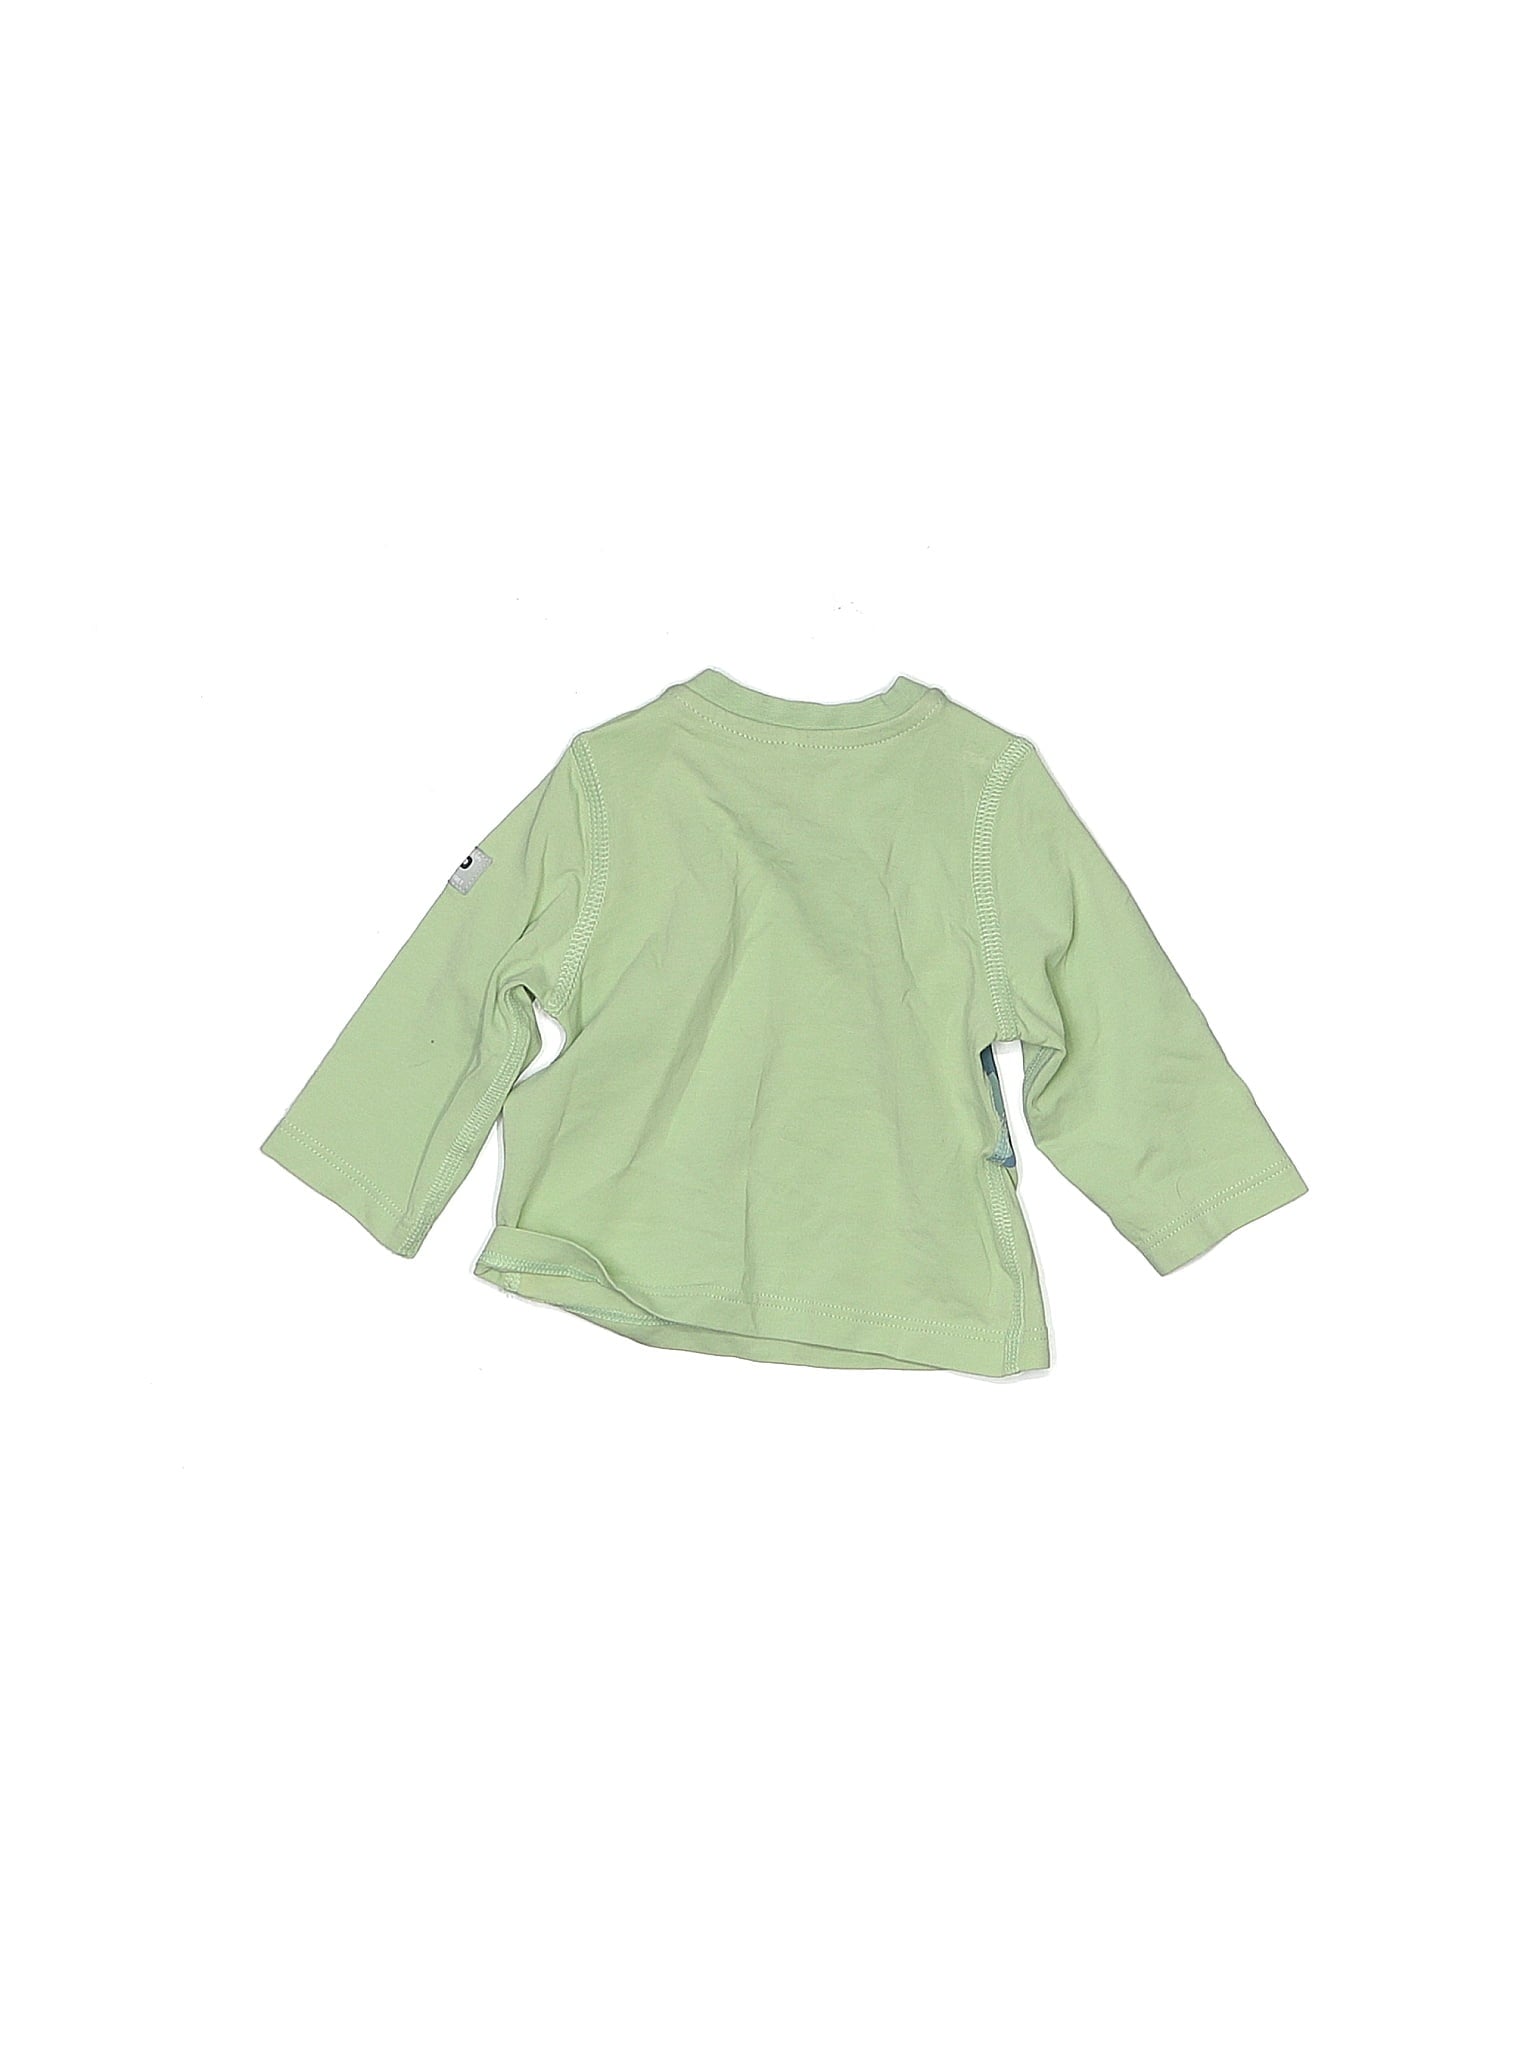 Long Sleeve T Shirt size - 50 (CM)